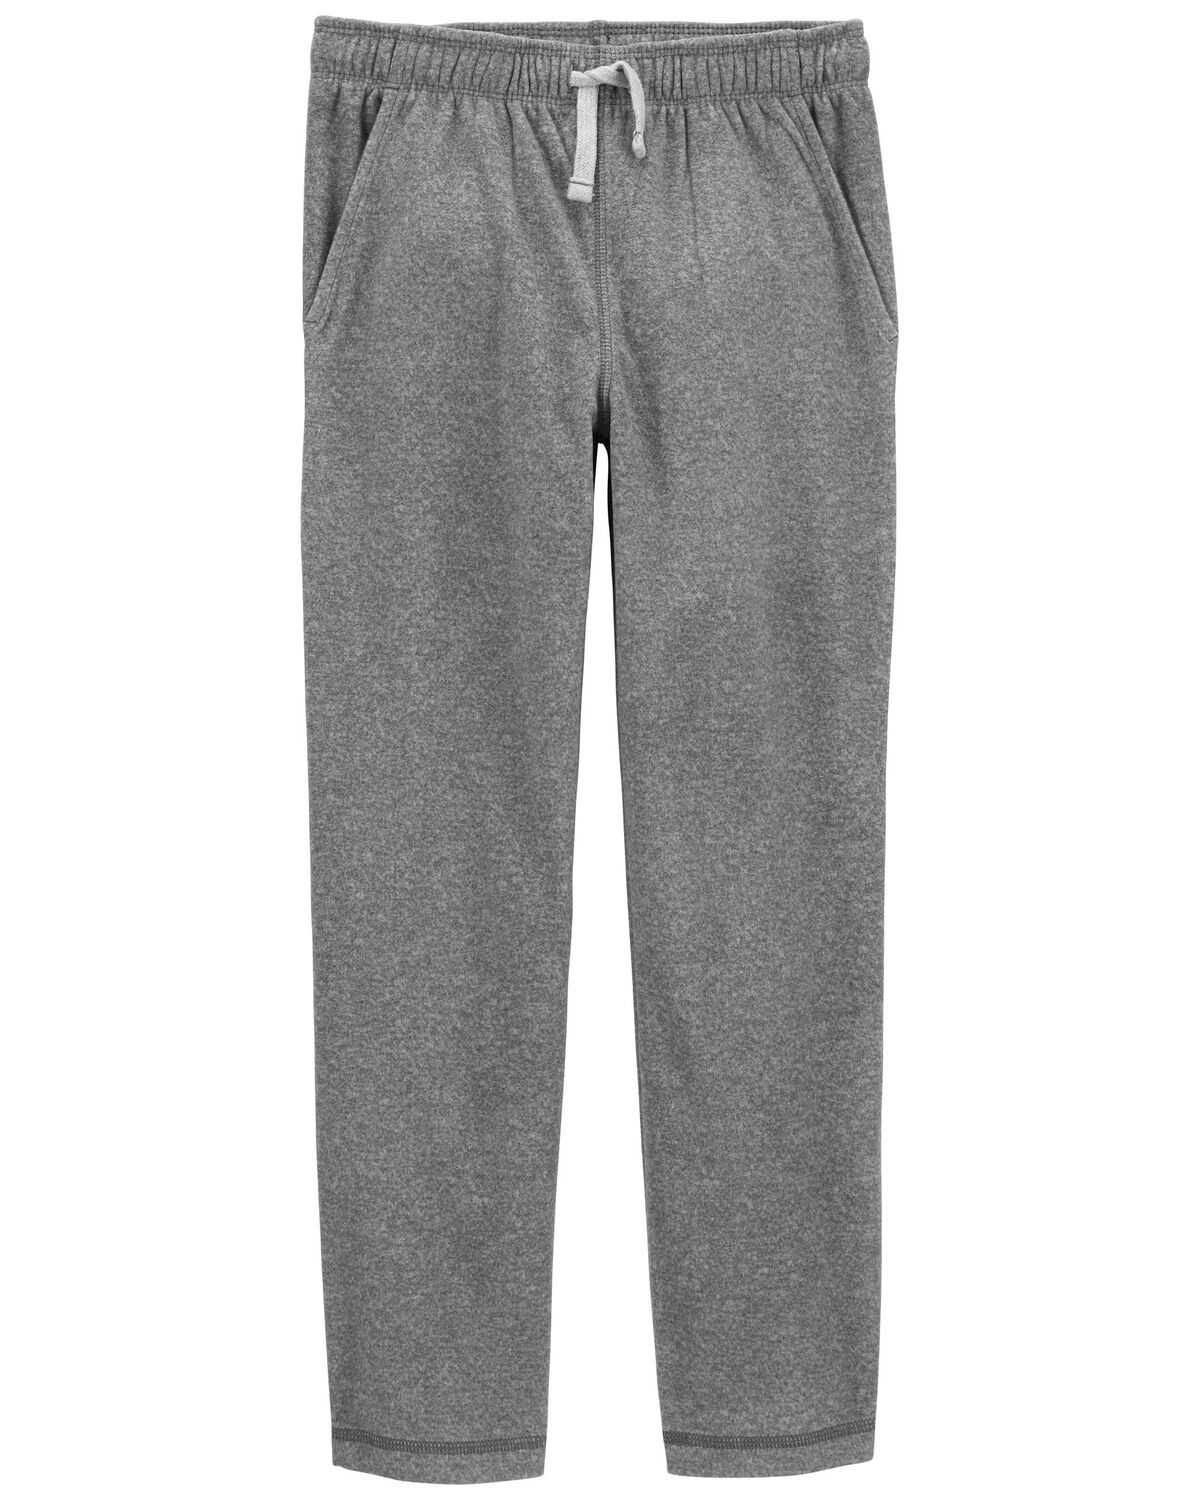 Grey Kid Pull-On Fleece Pants | carters.com